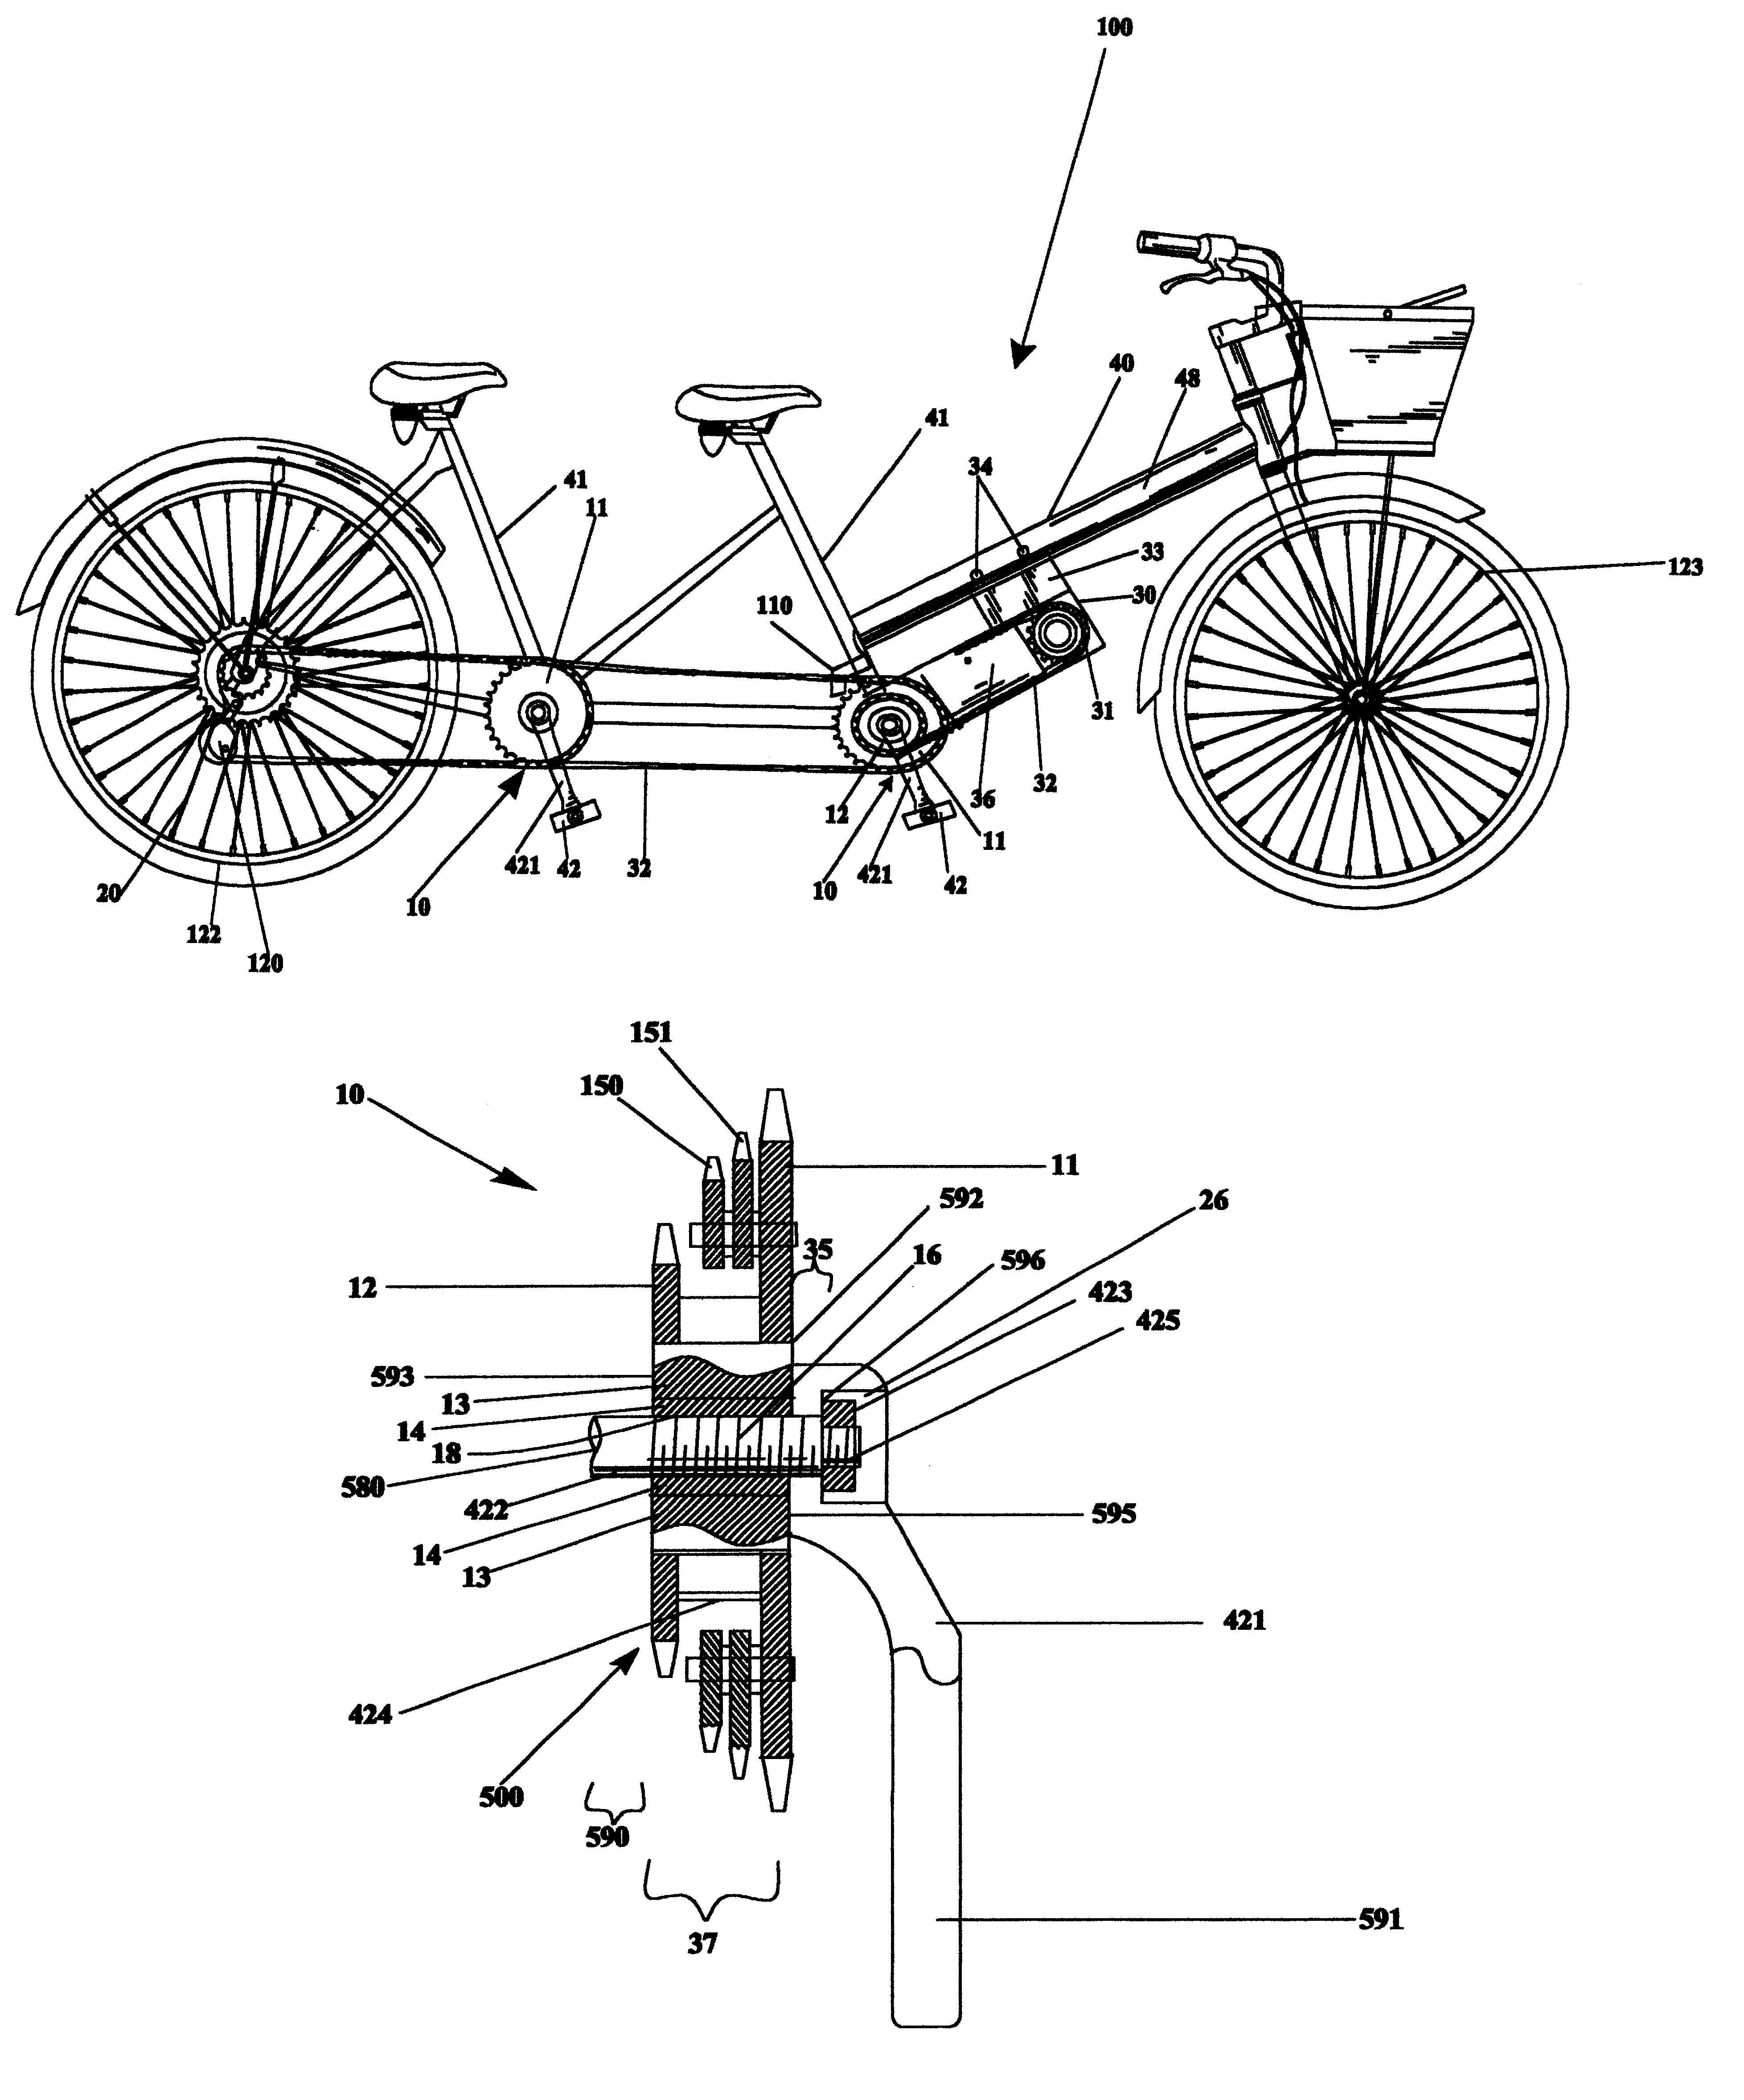 Bicycle's power train